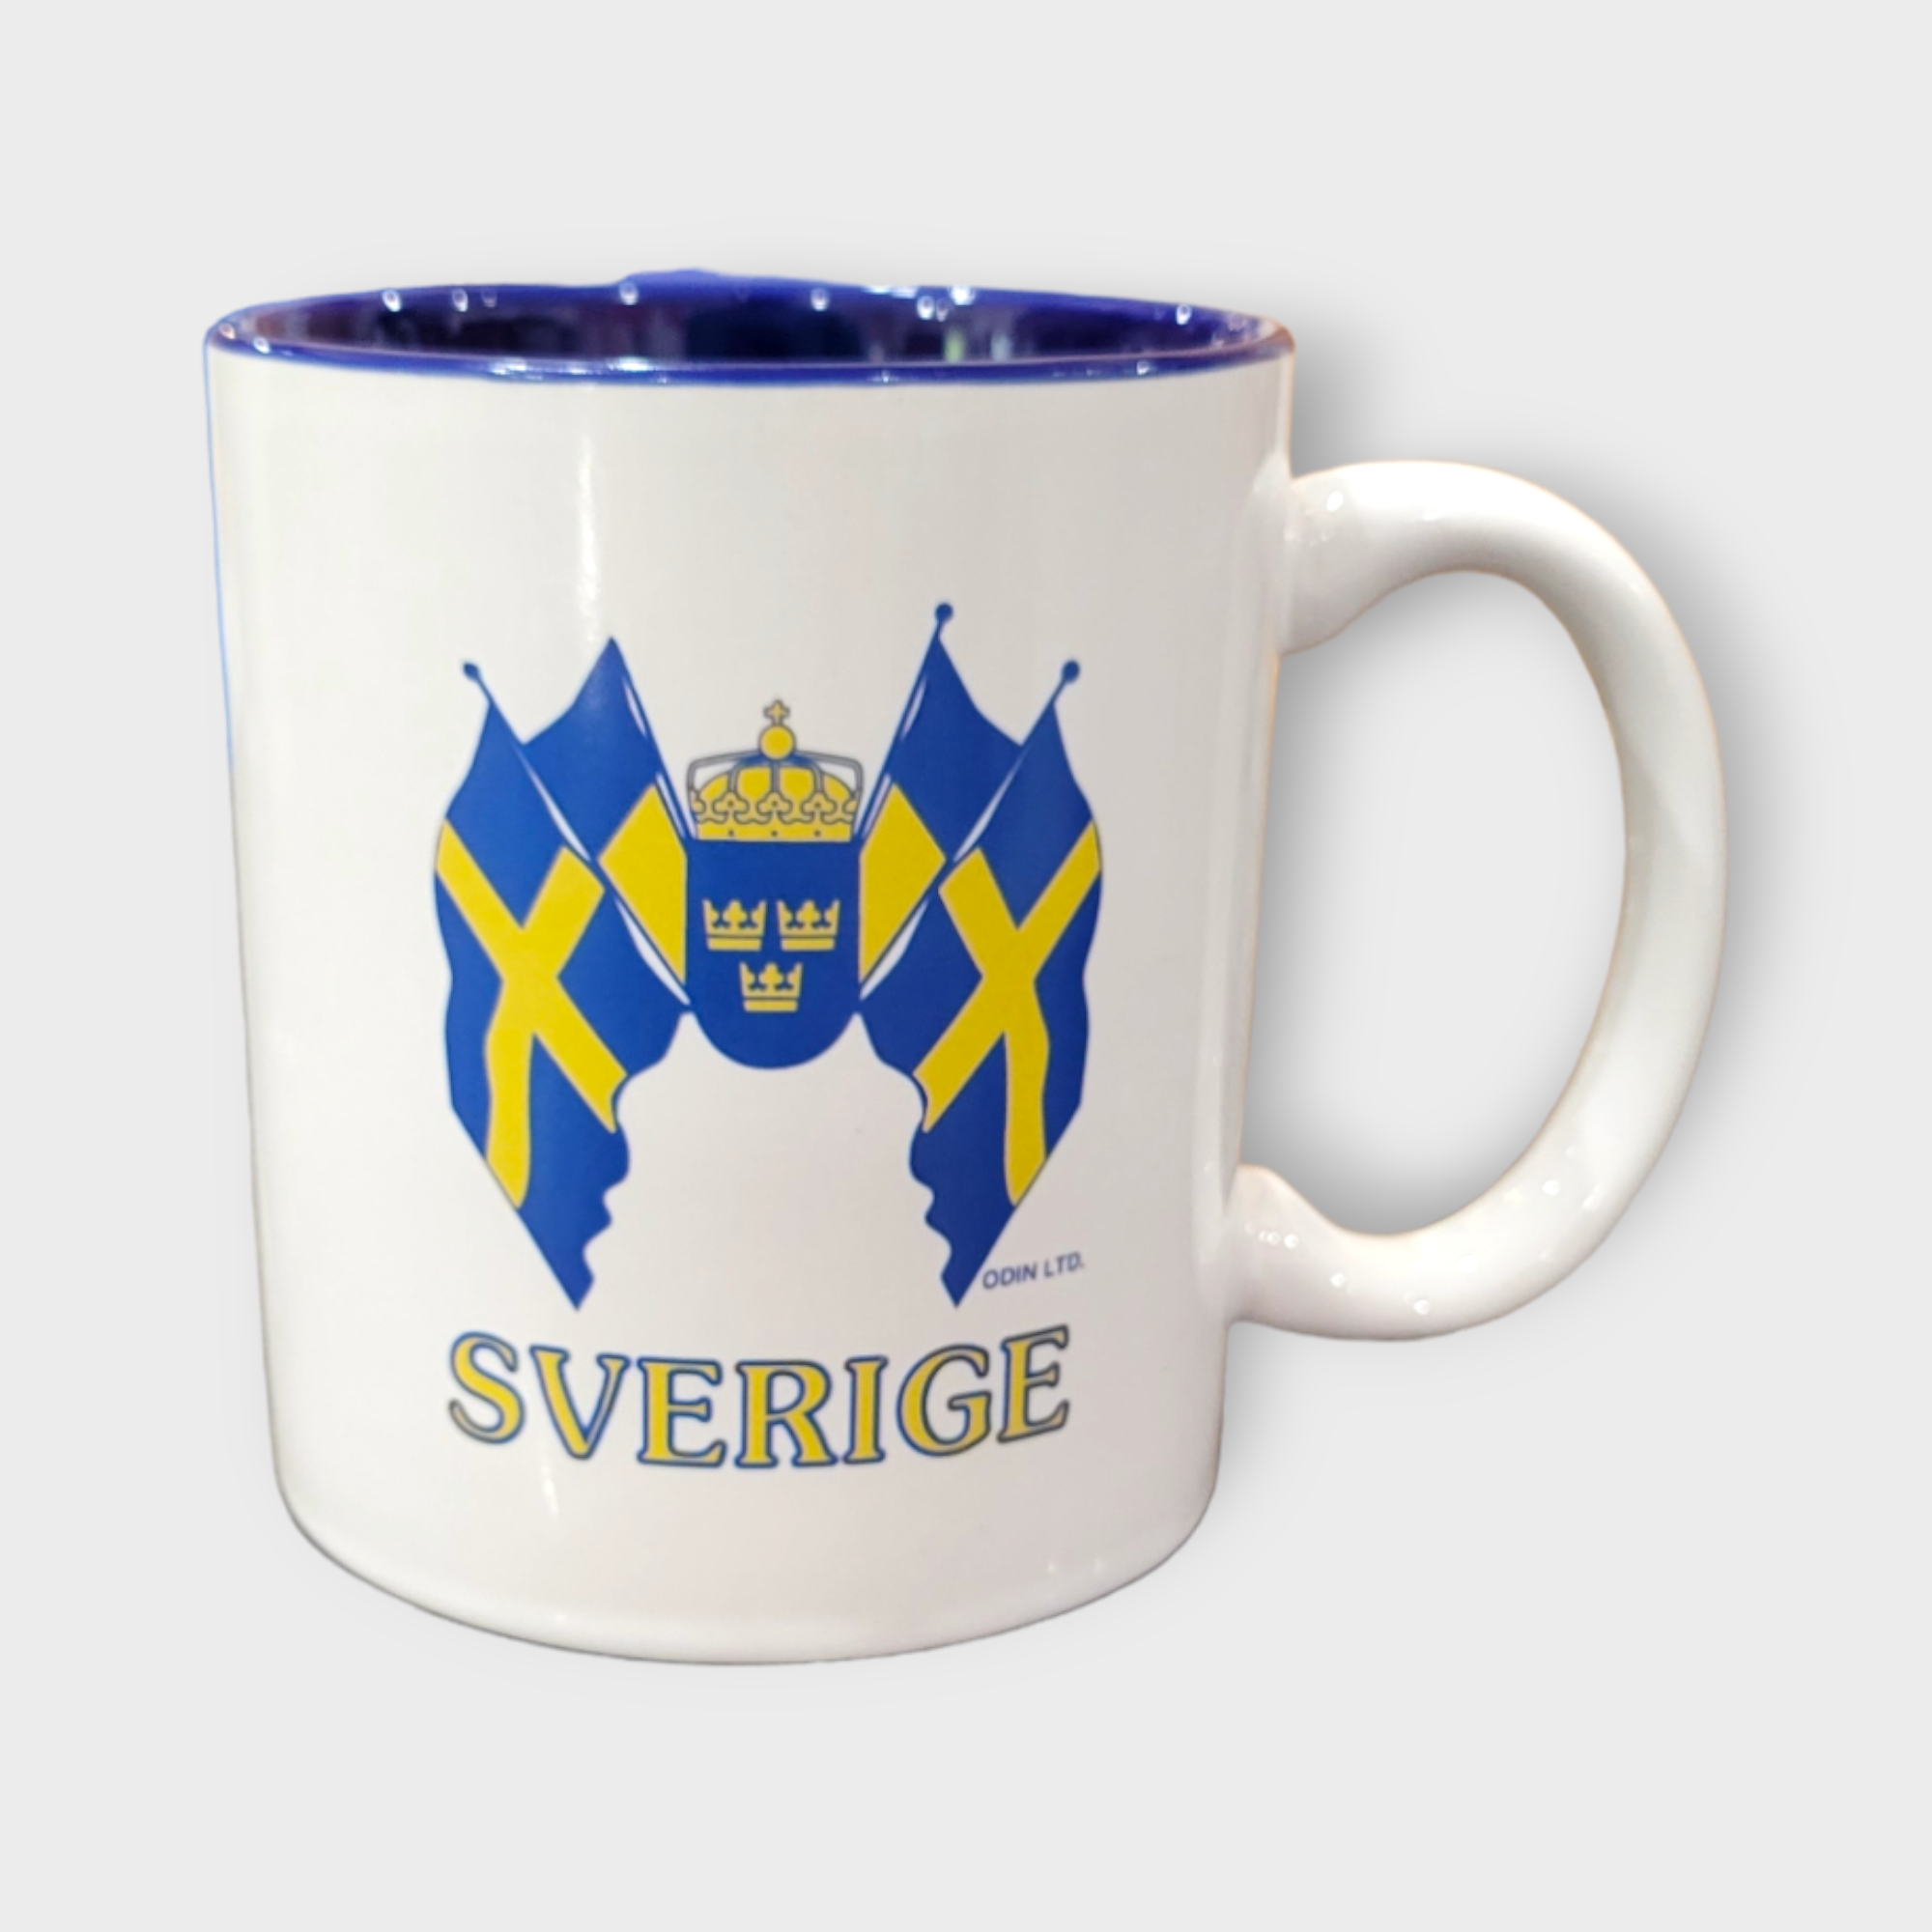 Mug: "Sverige" (11oz)